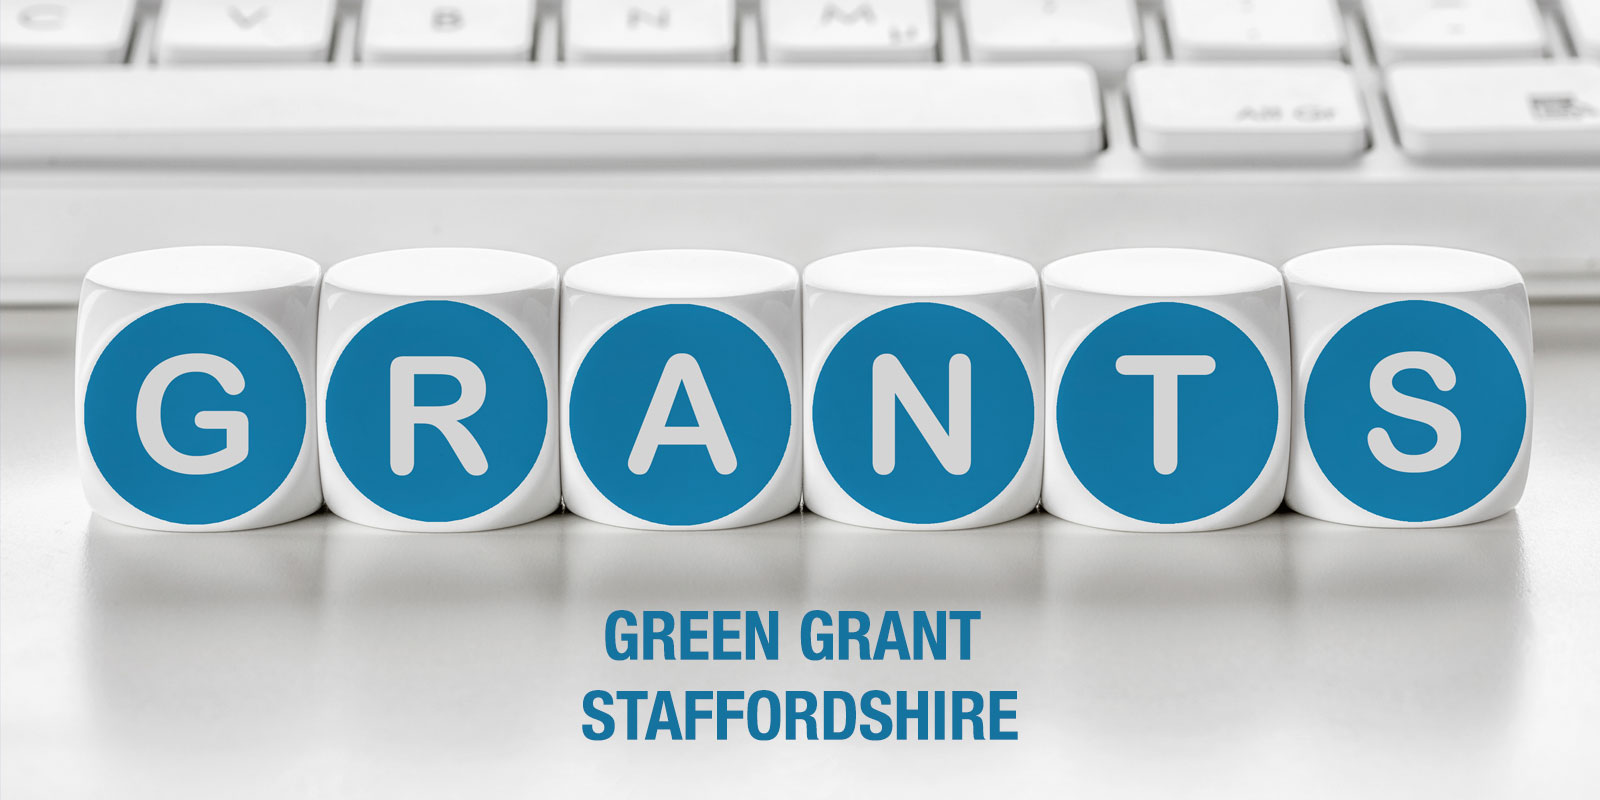 Green Grant - Staffordshire